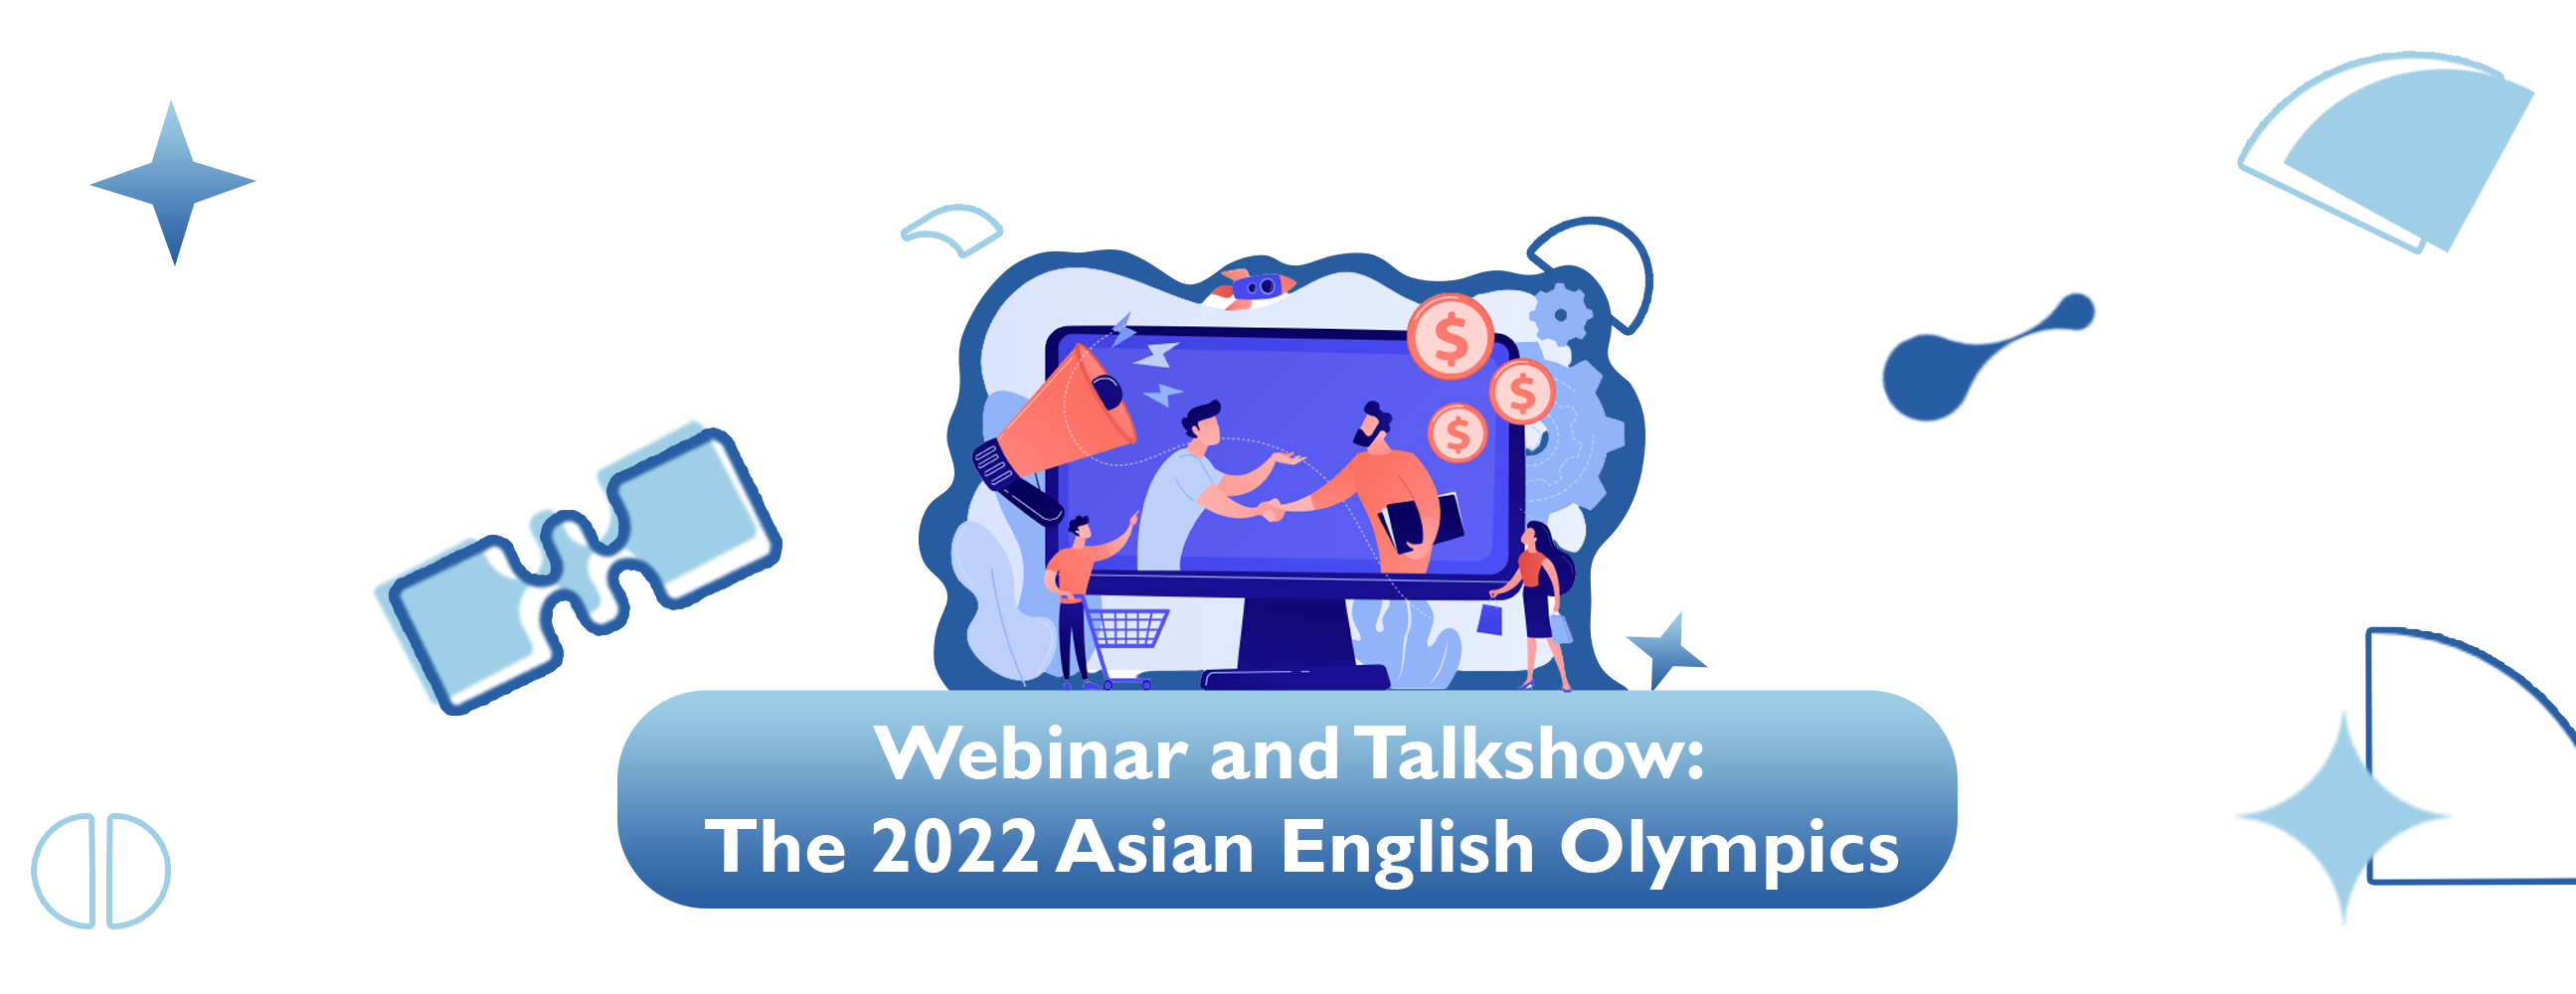 WEBINAR & TALK SHOW THE 2022 ASIAN ENGLISH OLYMPICS BINA NUSANTARA